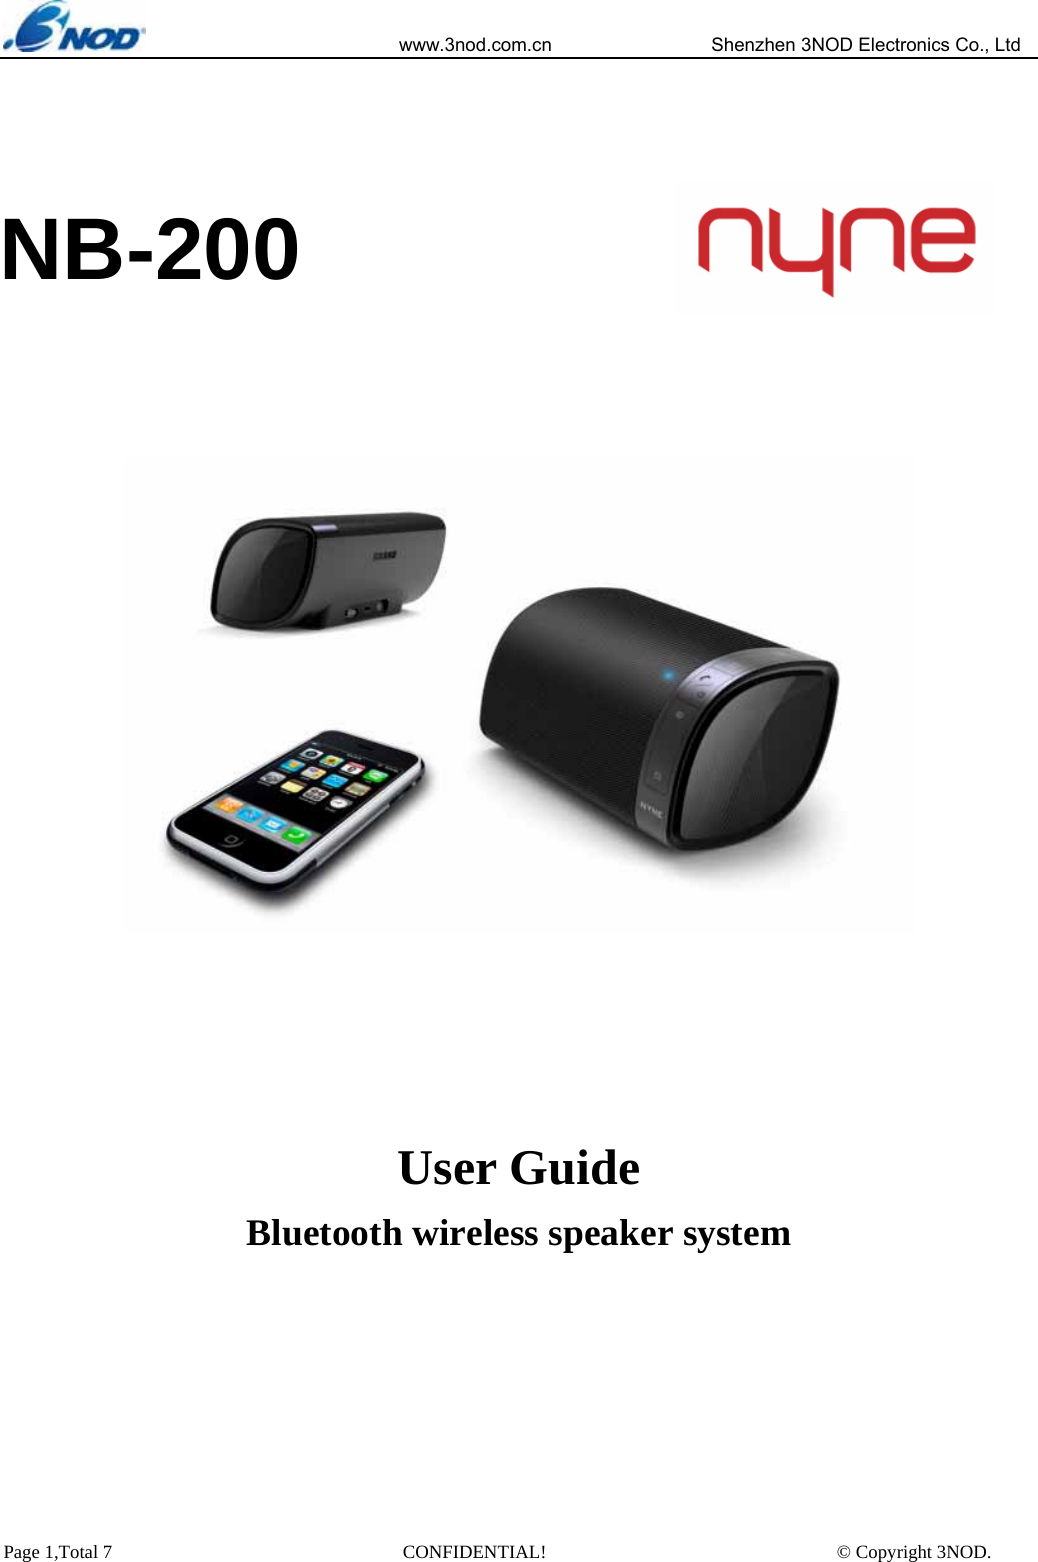                            www.3nod.com.cn                  Shenzhen 3NOD Electronics Co., Ltd Page 1,Total 7                               CONFIDENTIAL!                               © Copyright 3NOD.           User Guide Bluetooth wireless speaker system     NB-200 